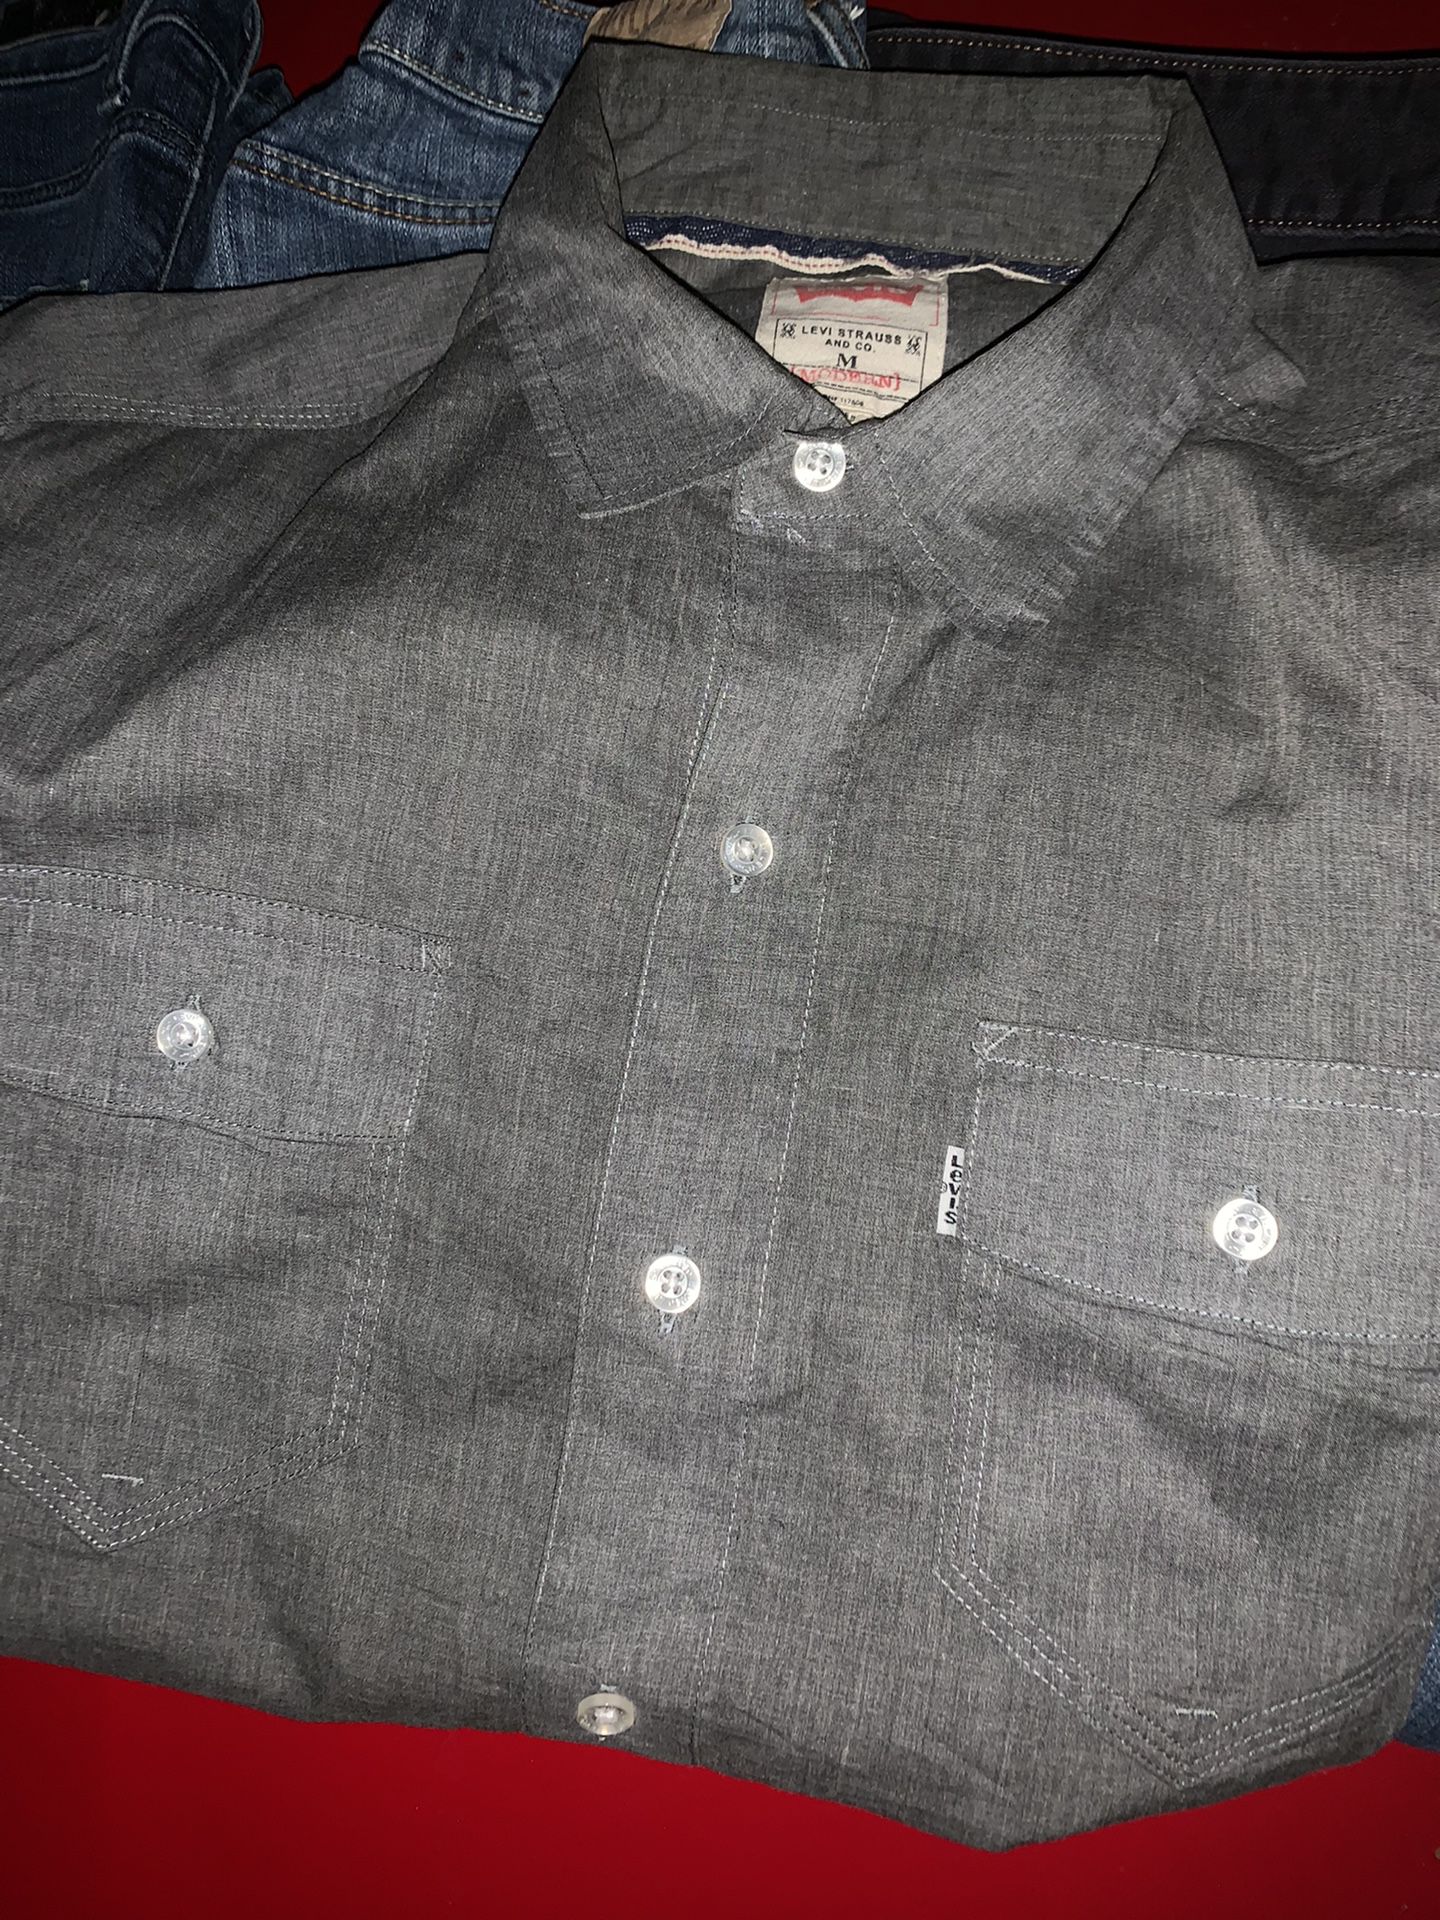 Levi’s Size Medium Shirt